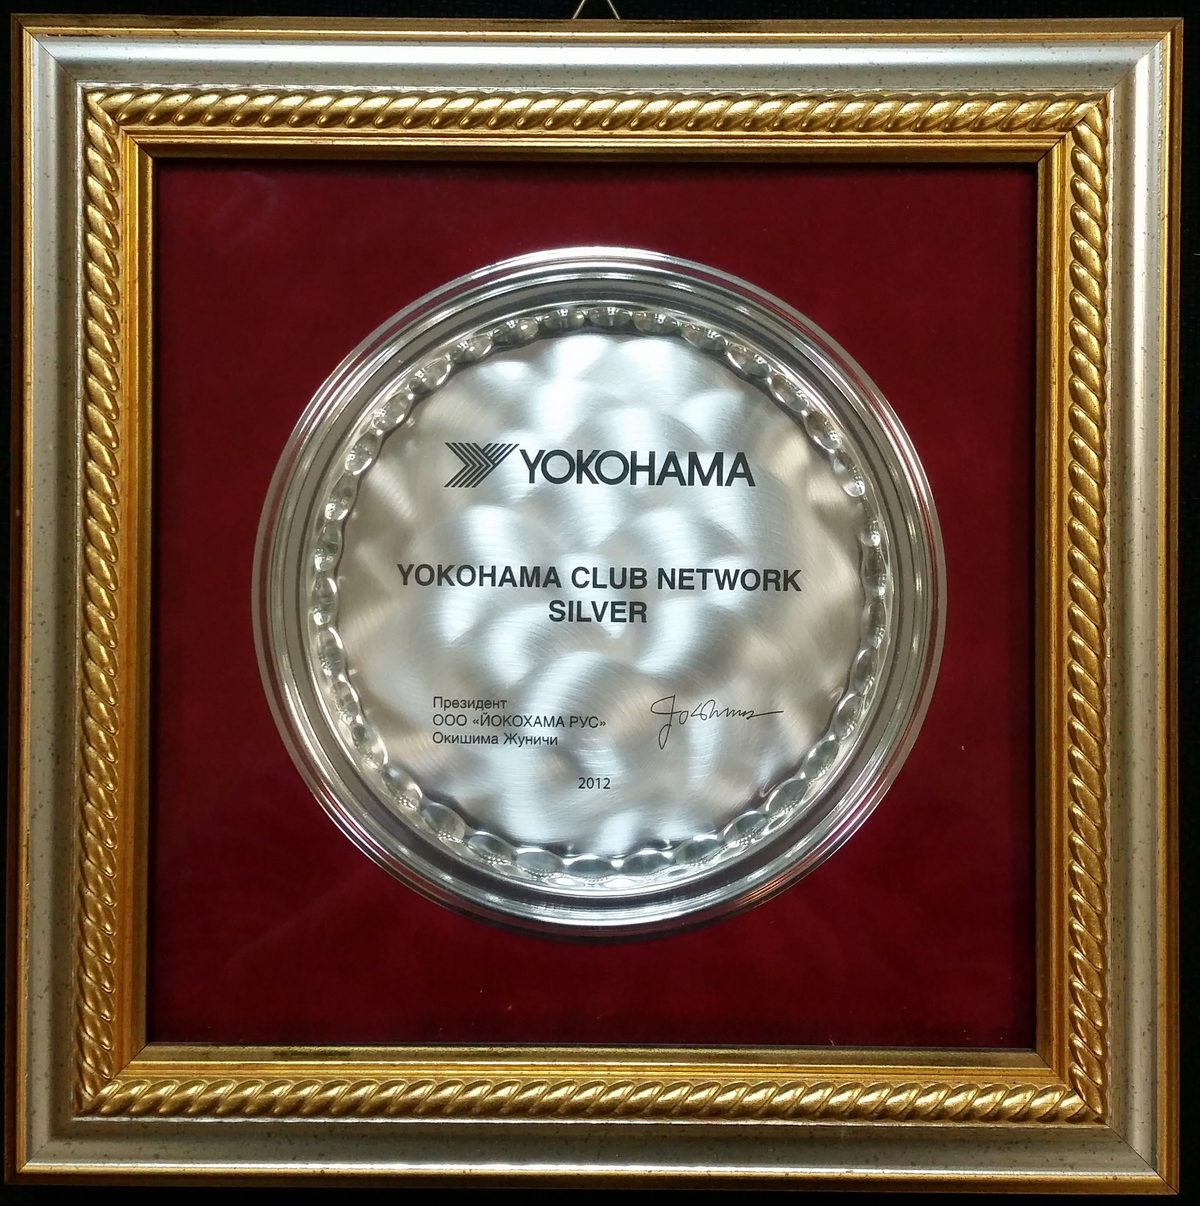 Yokohama club network silver 2012